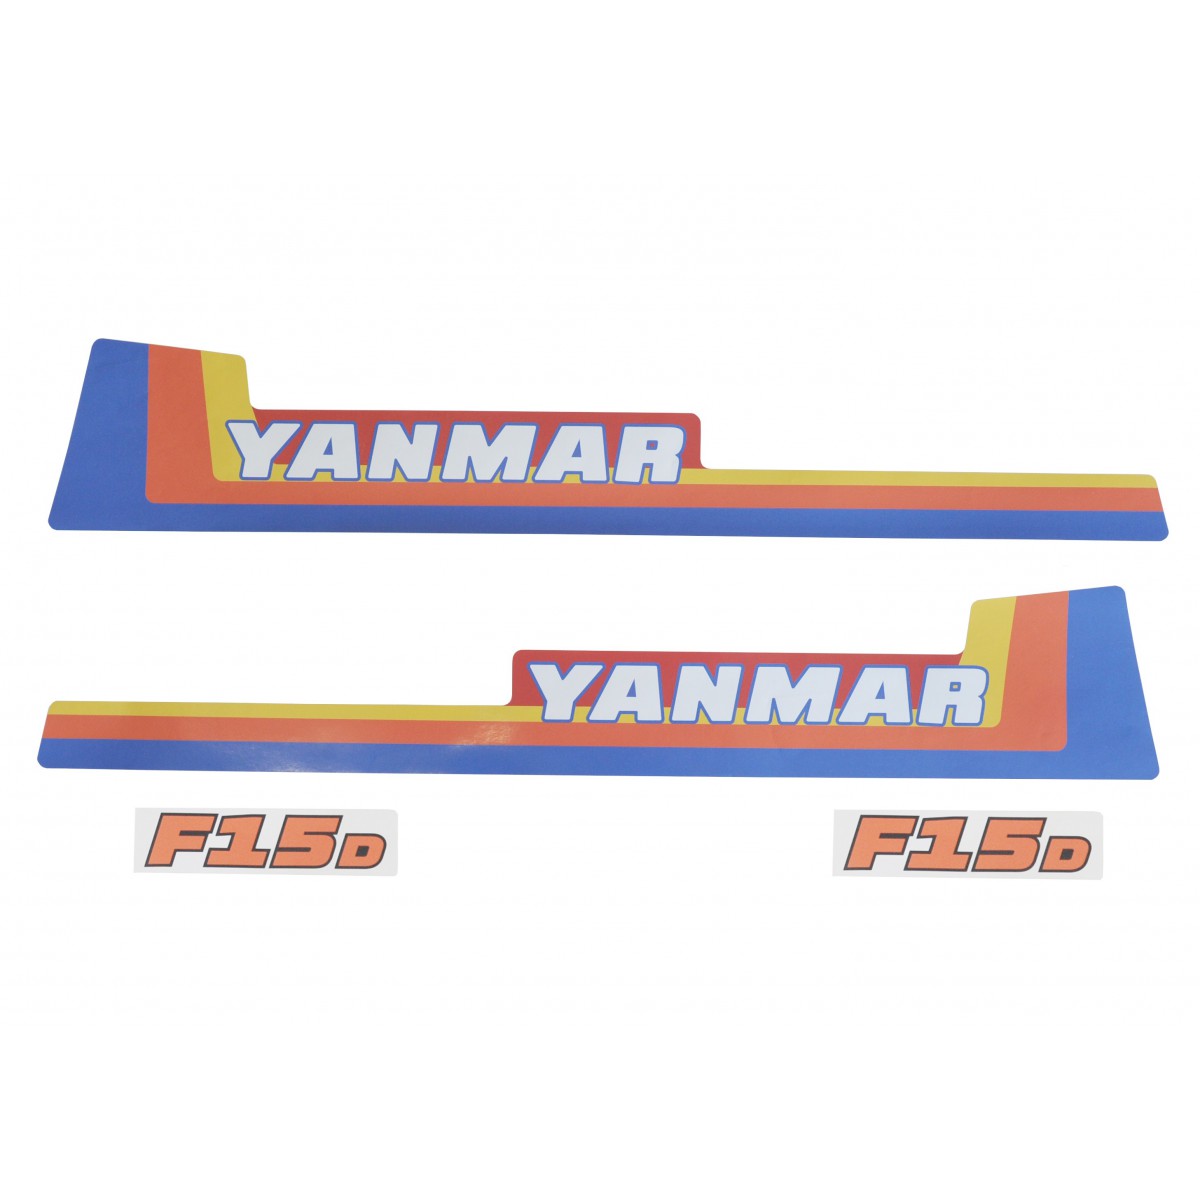 Stikers Yanmar F15D decals